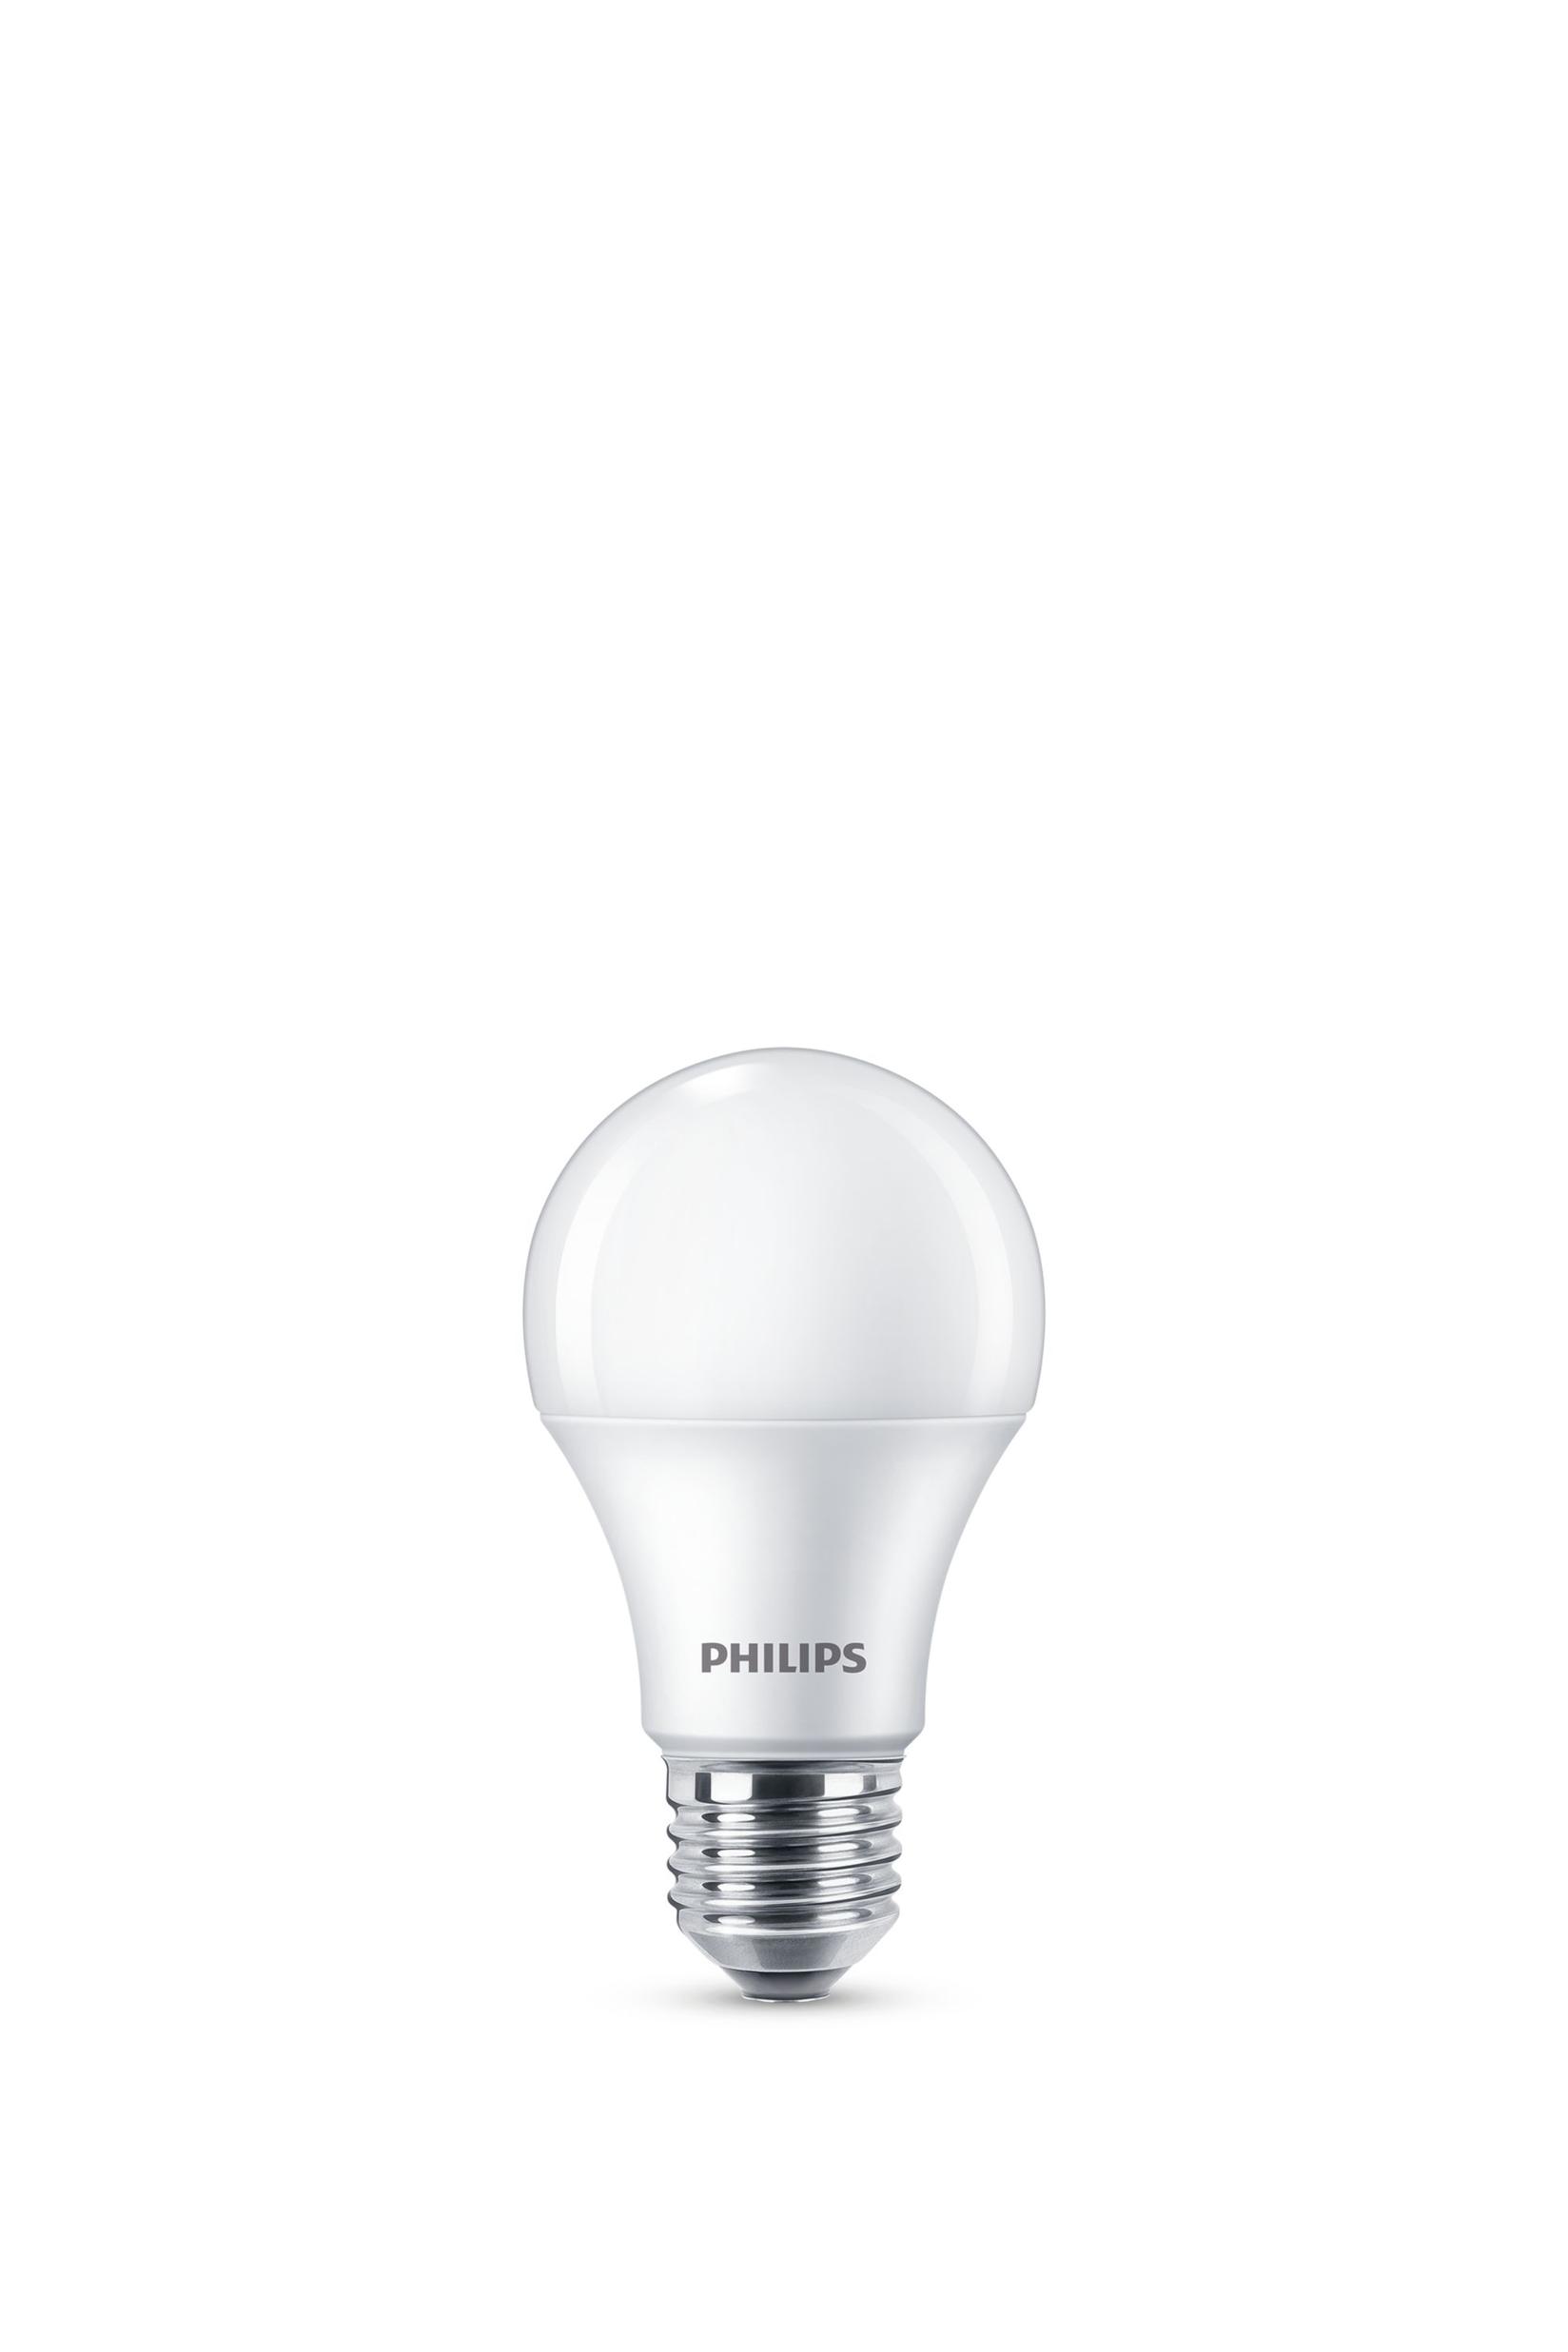 Selected image for PHILIPS LED sijalica 9 W E27 8718699630607